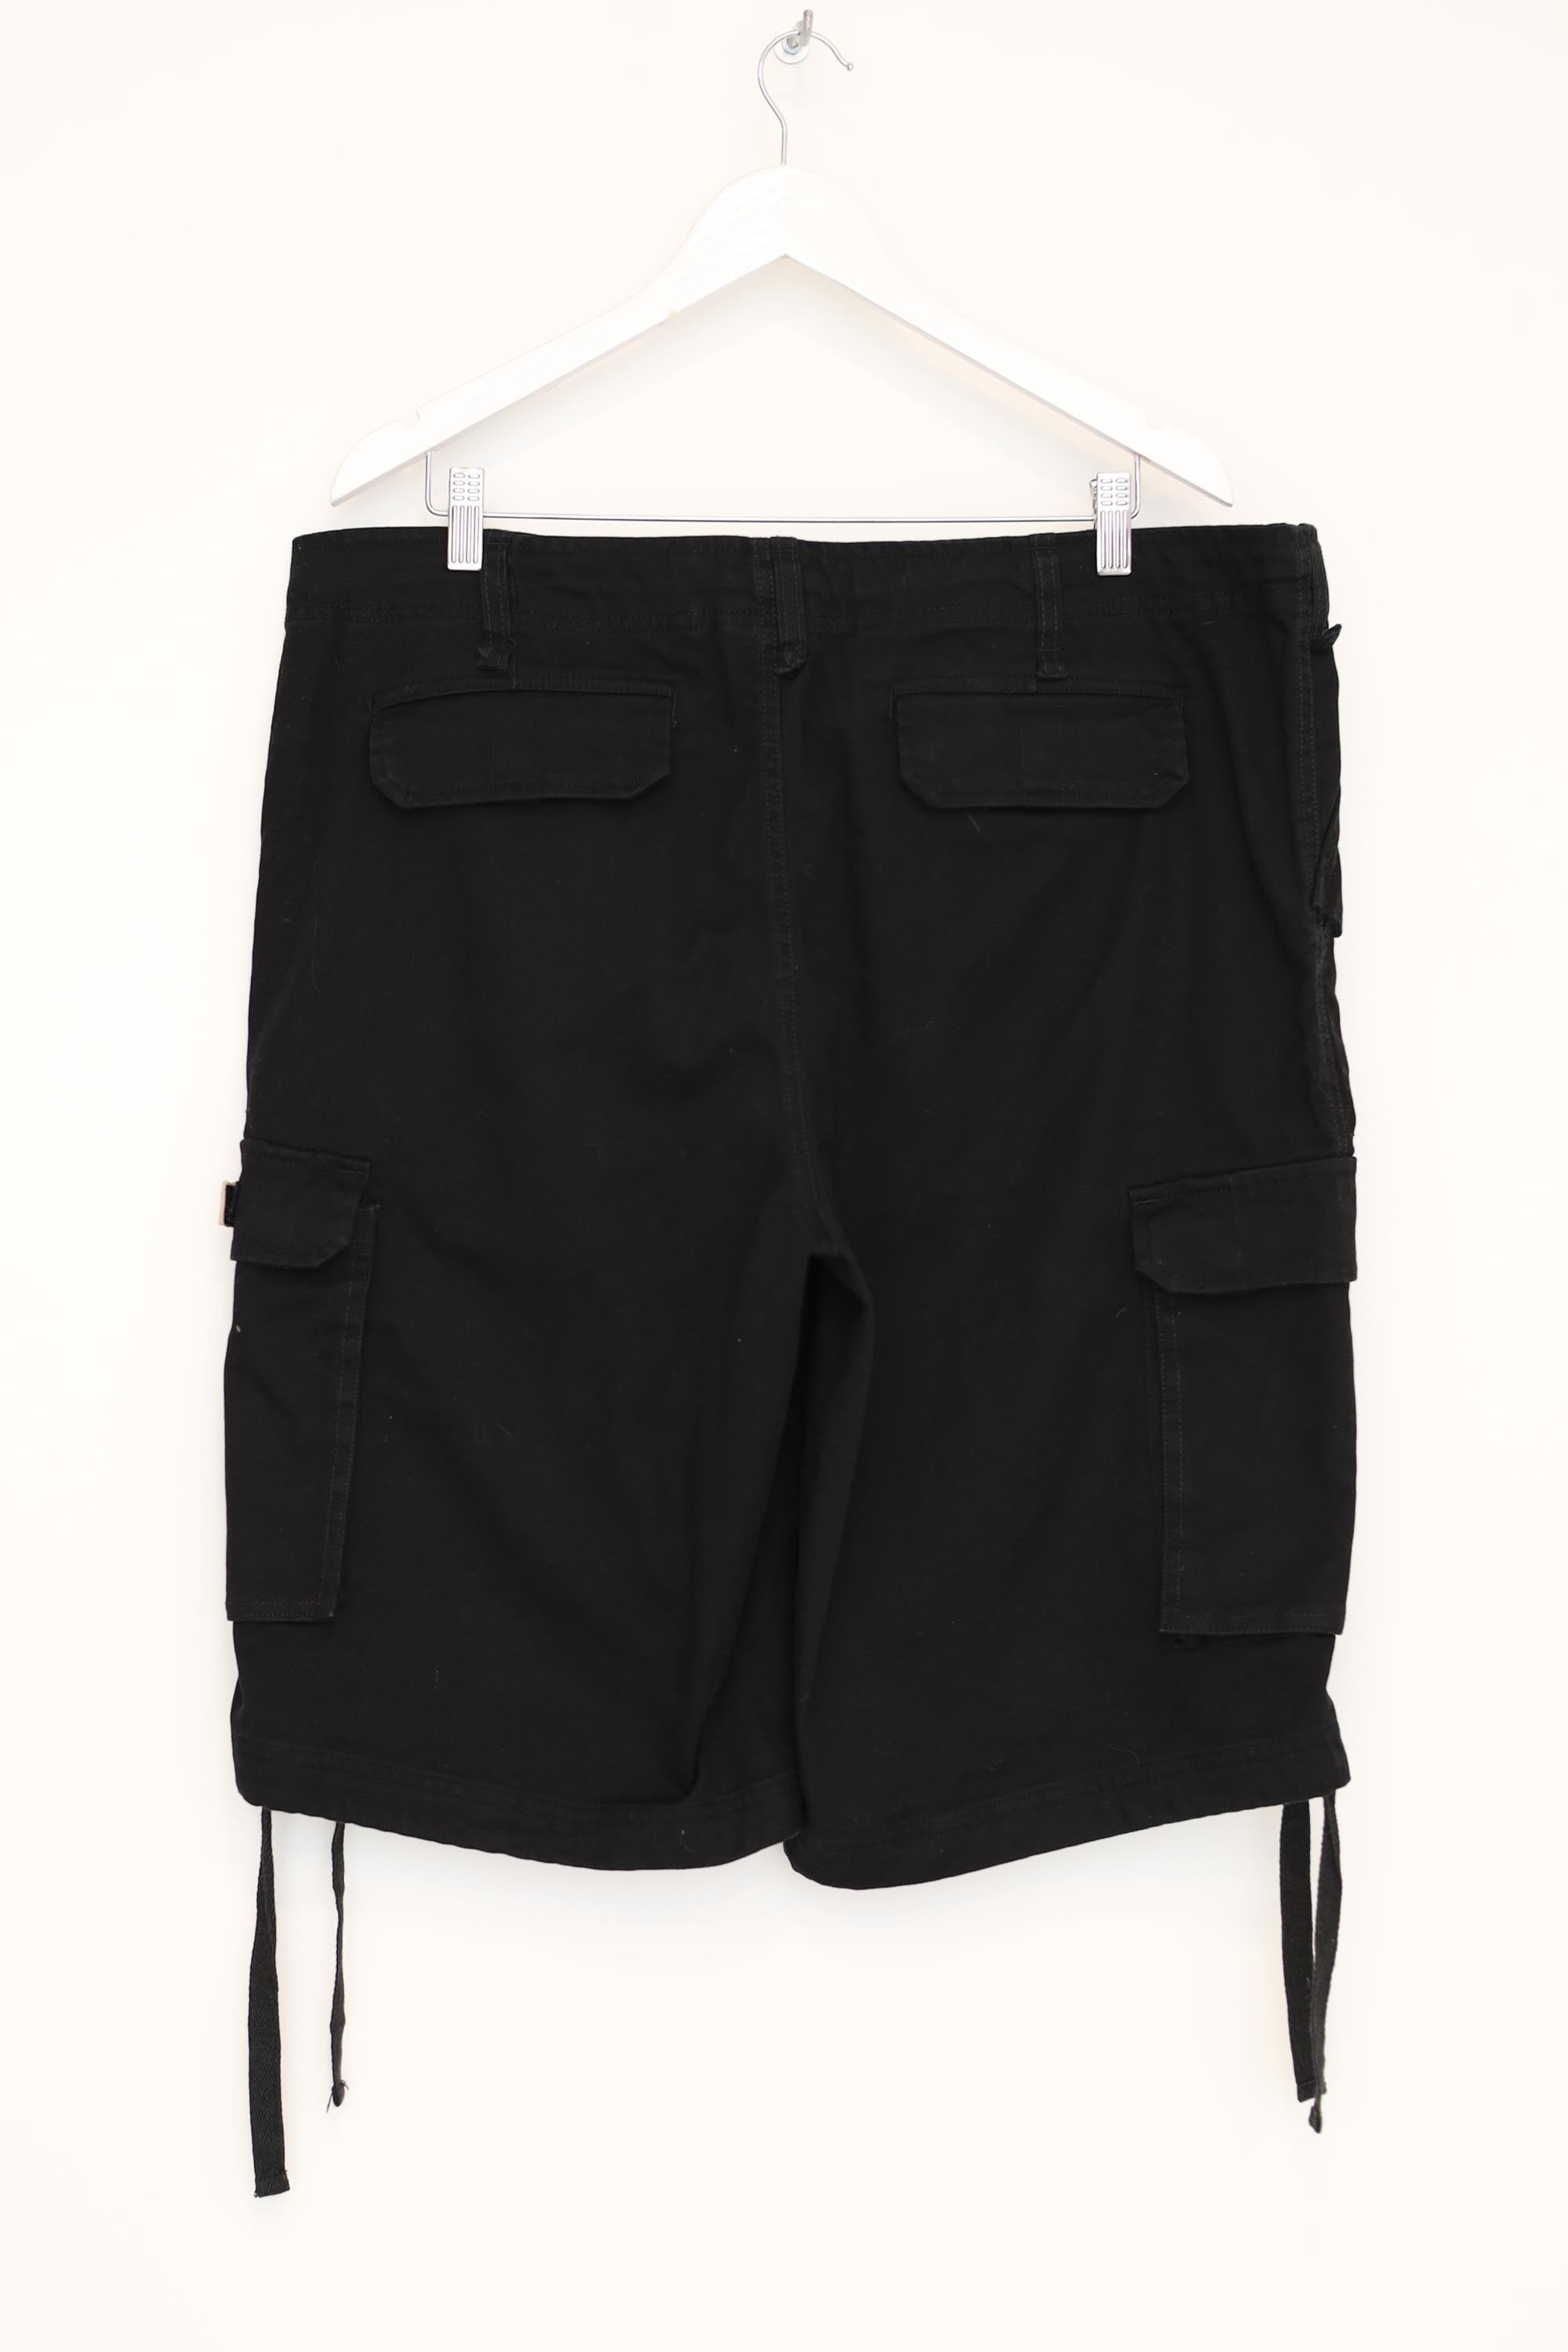 Pantaloni Scurti Vintage Barbati - XL - Nou Cu Eticheta